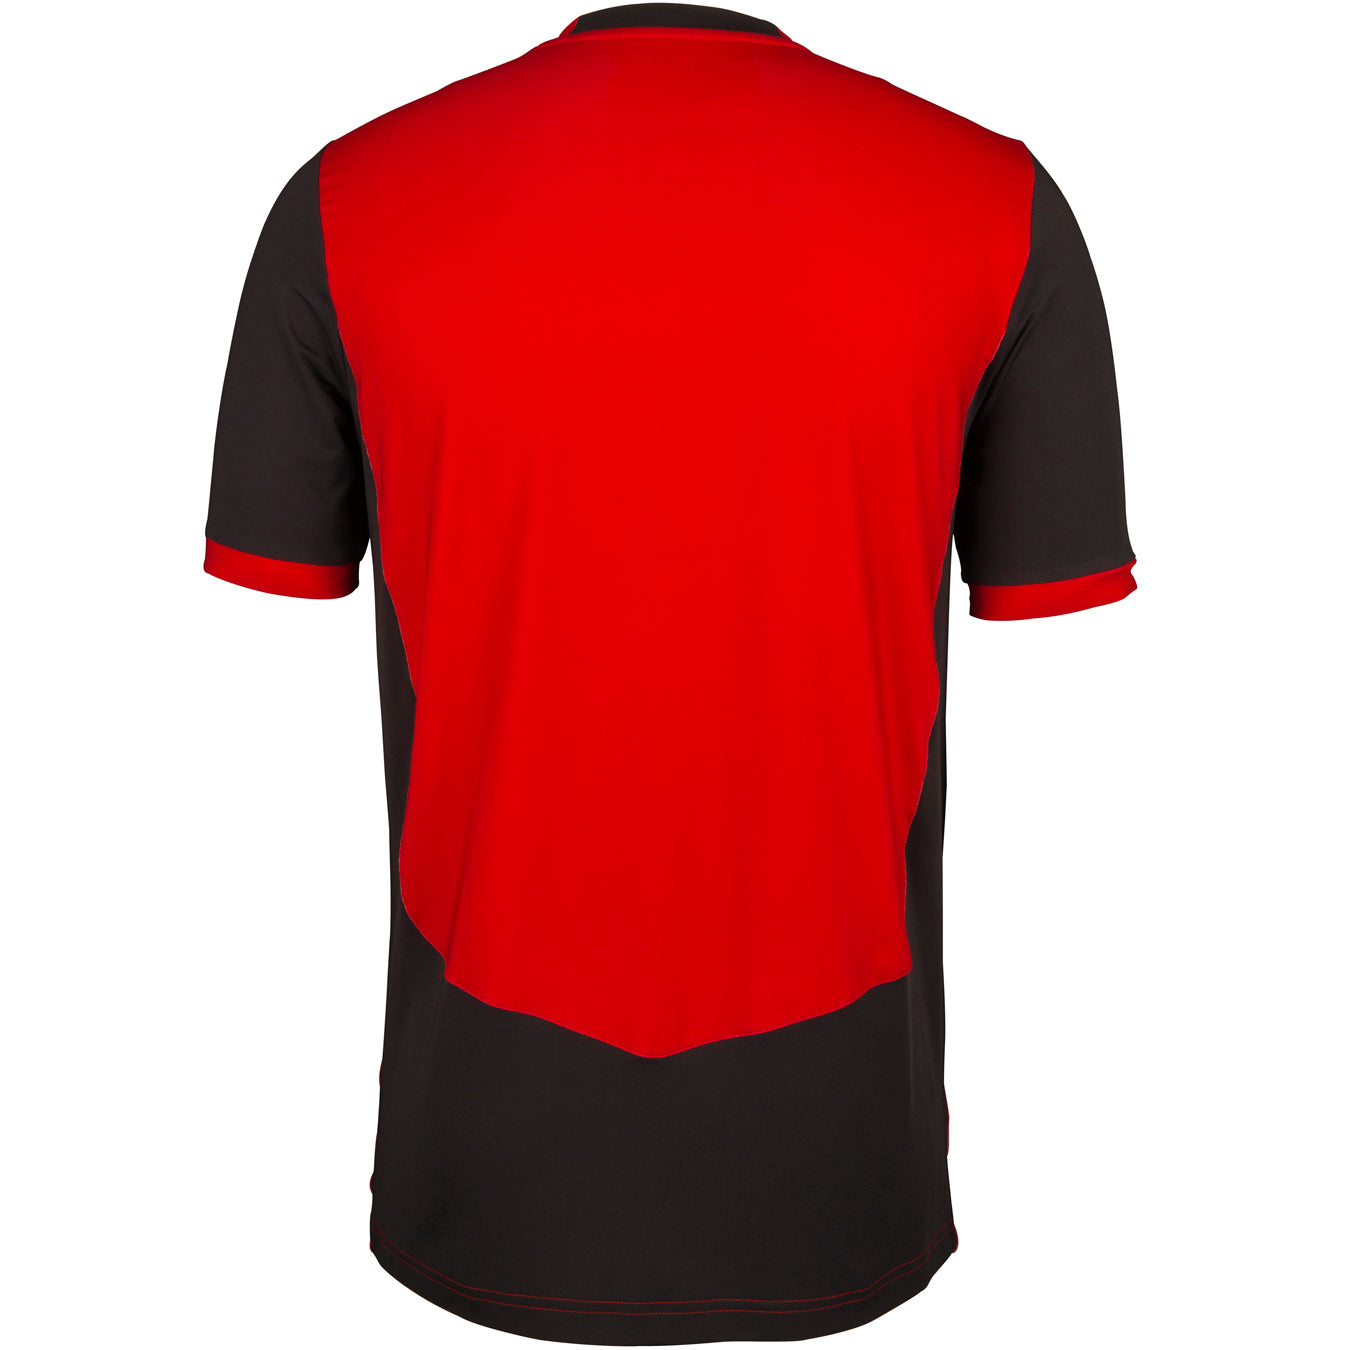 CCFB18Shirt T20 Red_black, Back